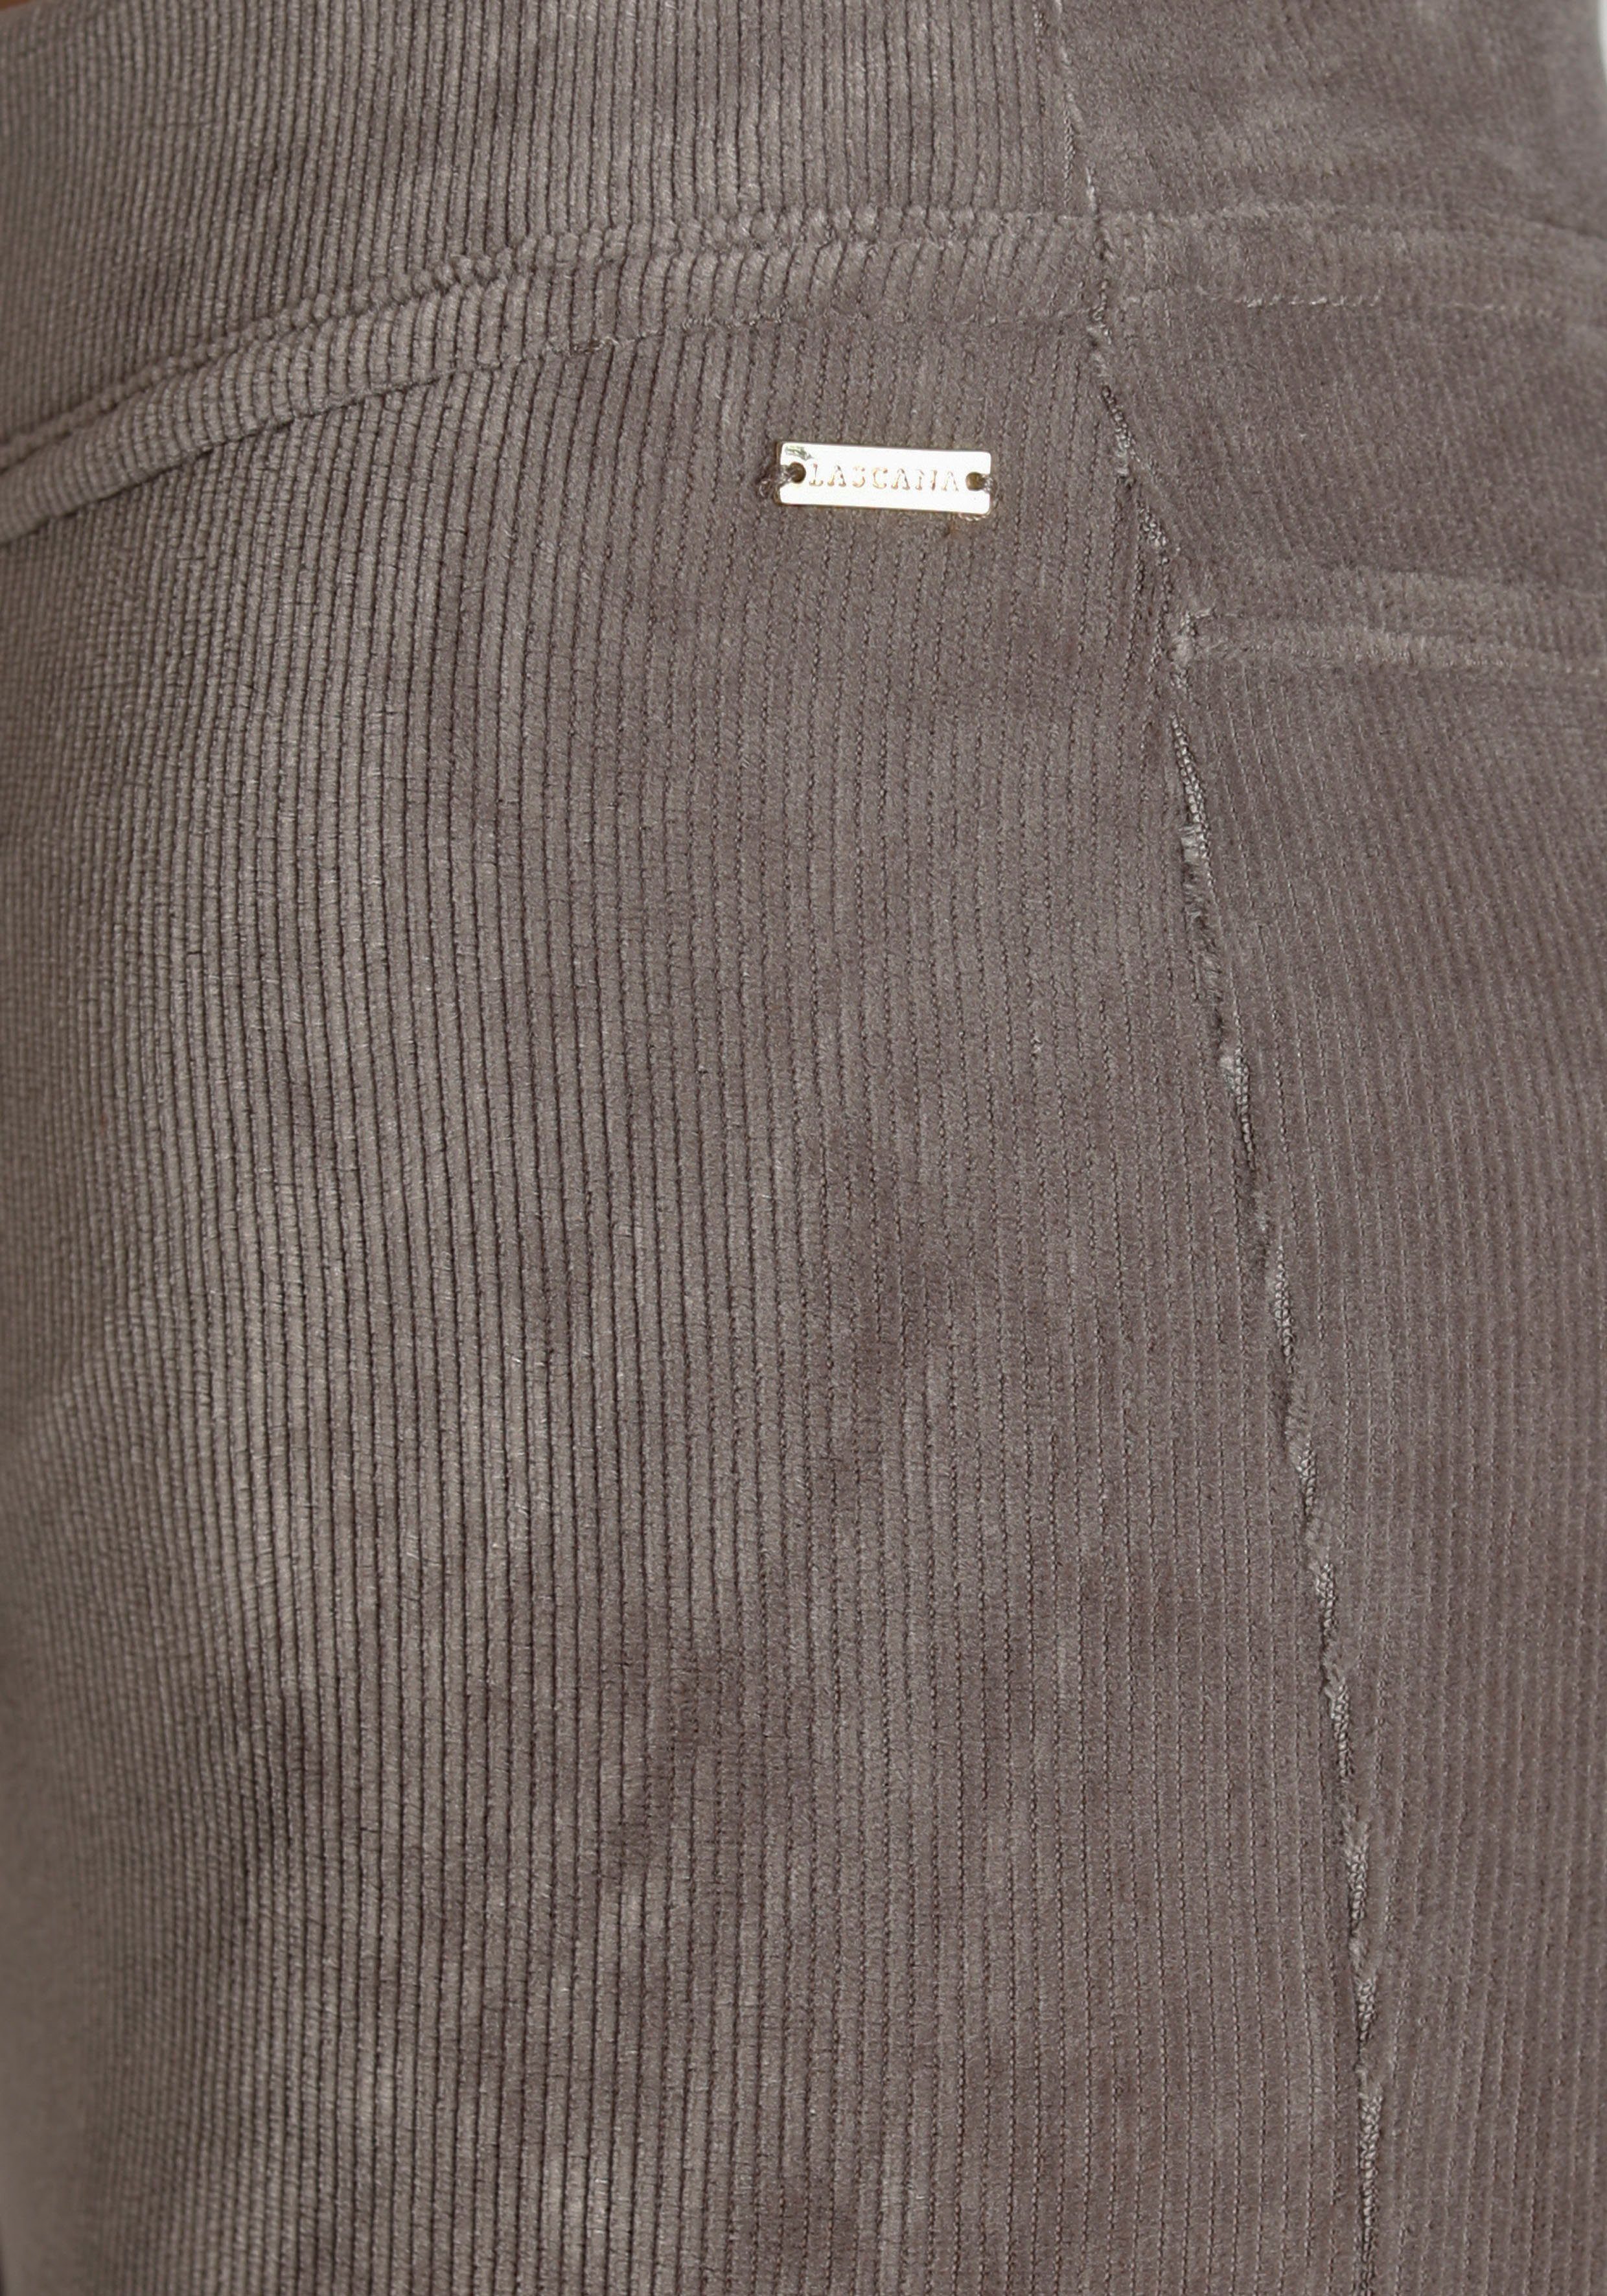 stone weichem Jazzpants in Loungewear Material aus Cord-Optik, LASCANA